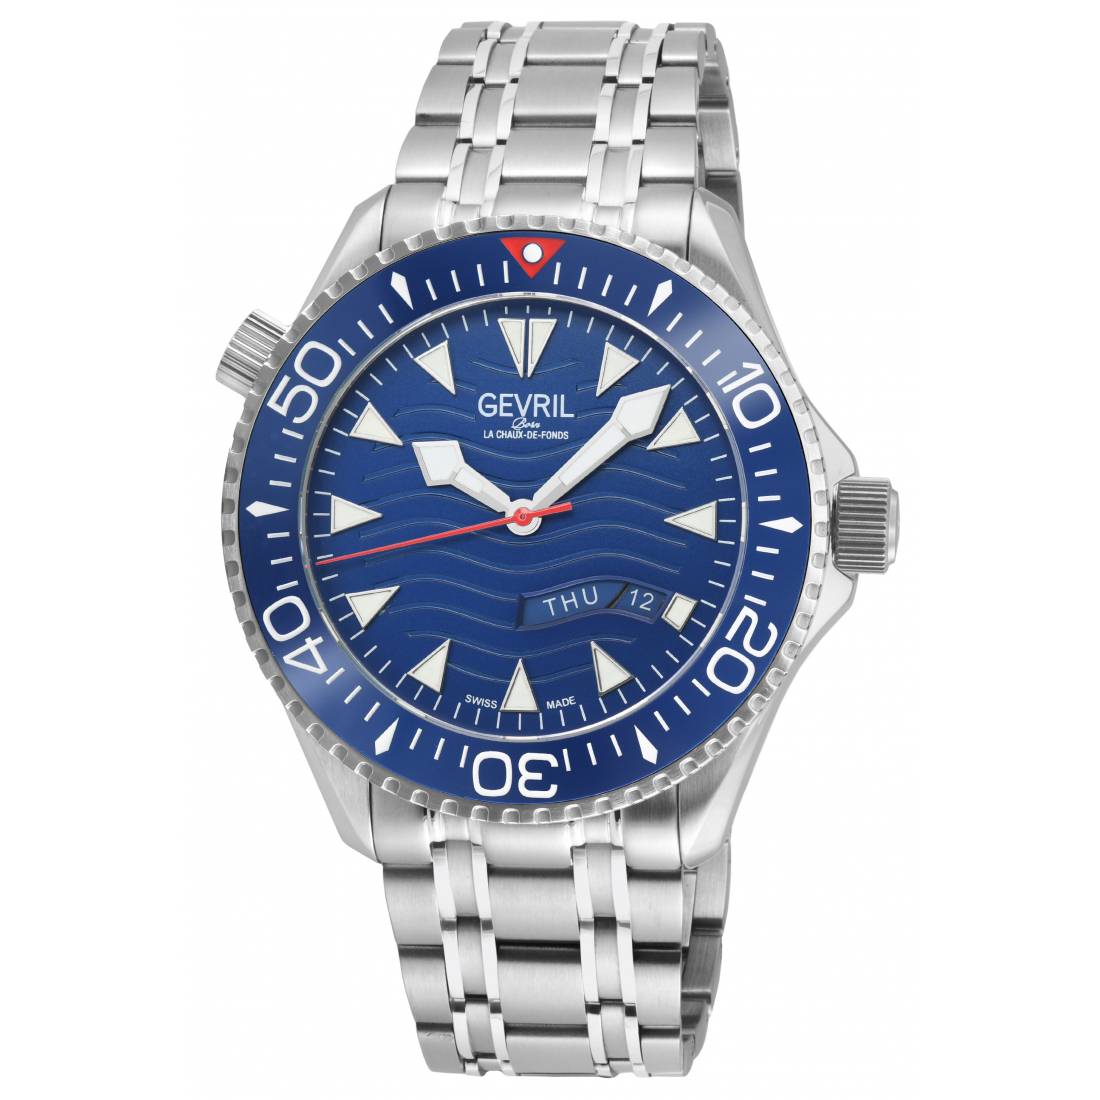 Men's Hudson Yards Swiss Automatic Watch  316L SS Case, Dark Blue Bezel, Stainless Steel Satin and Polished Bracelet